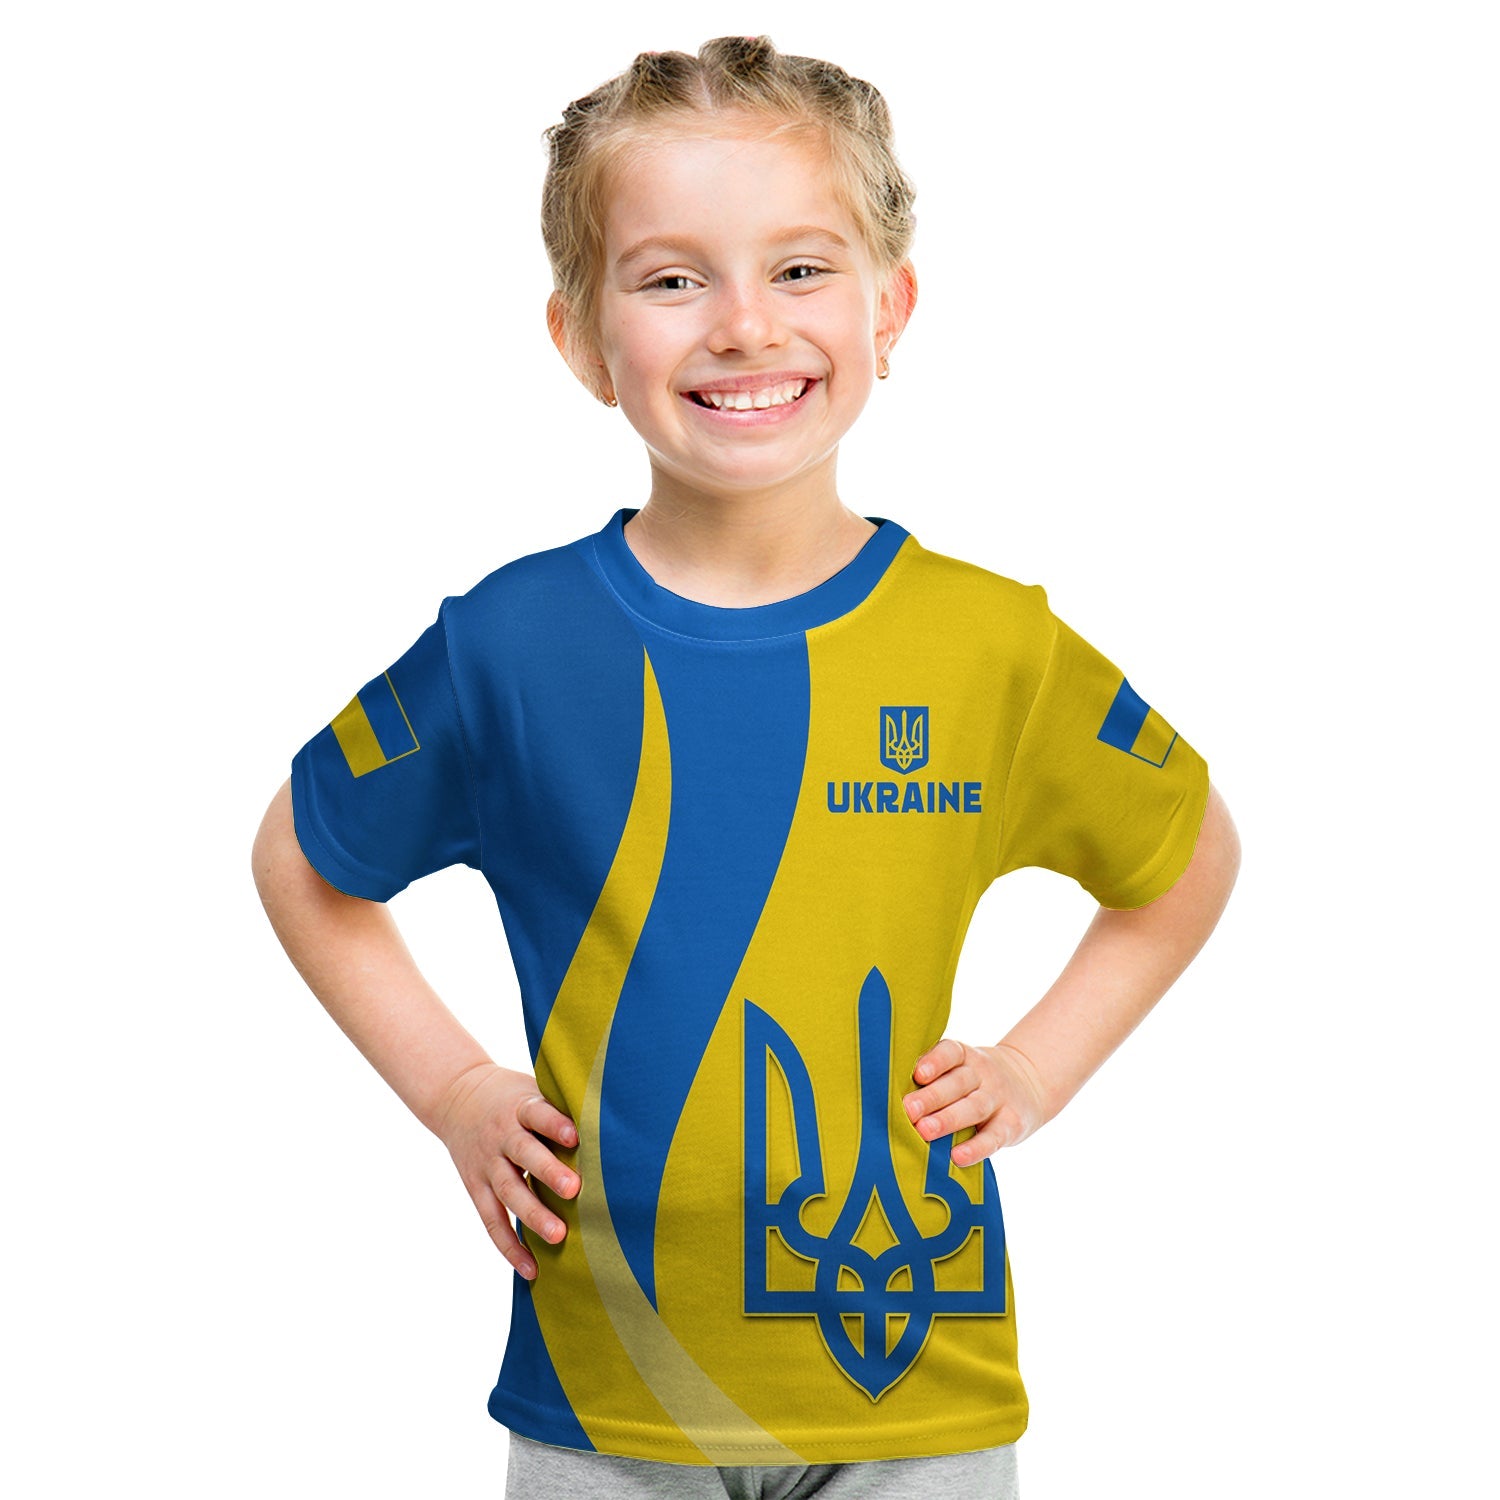 ukraine-t-shirt-kid-always-proud-ukraine